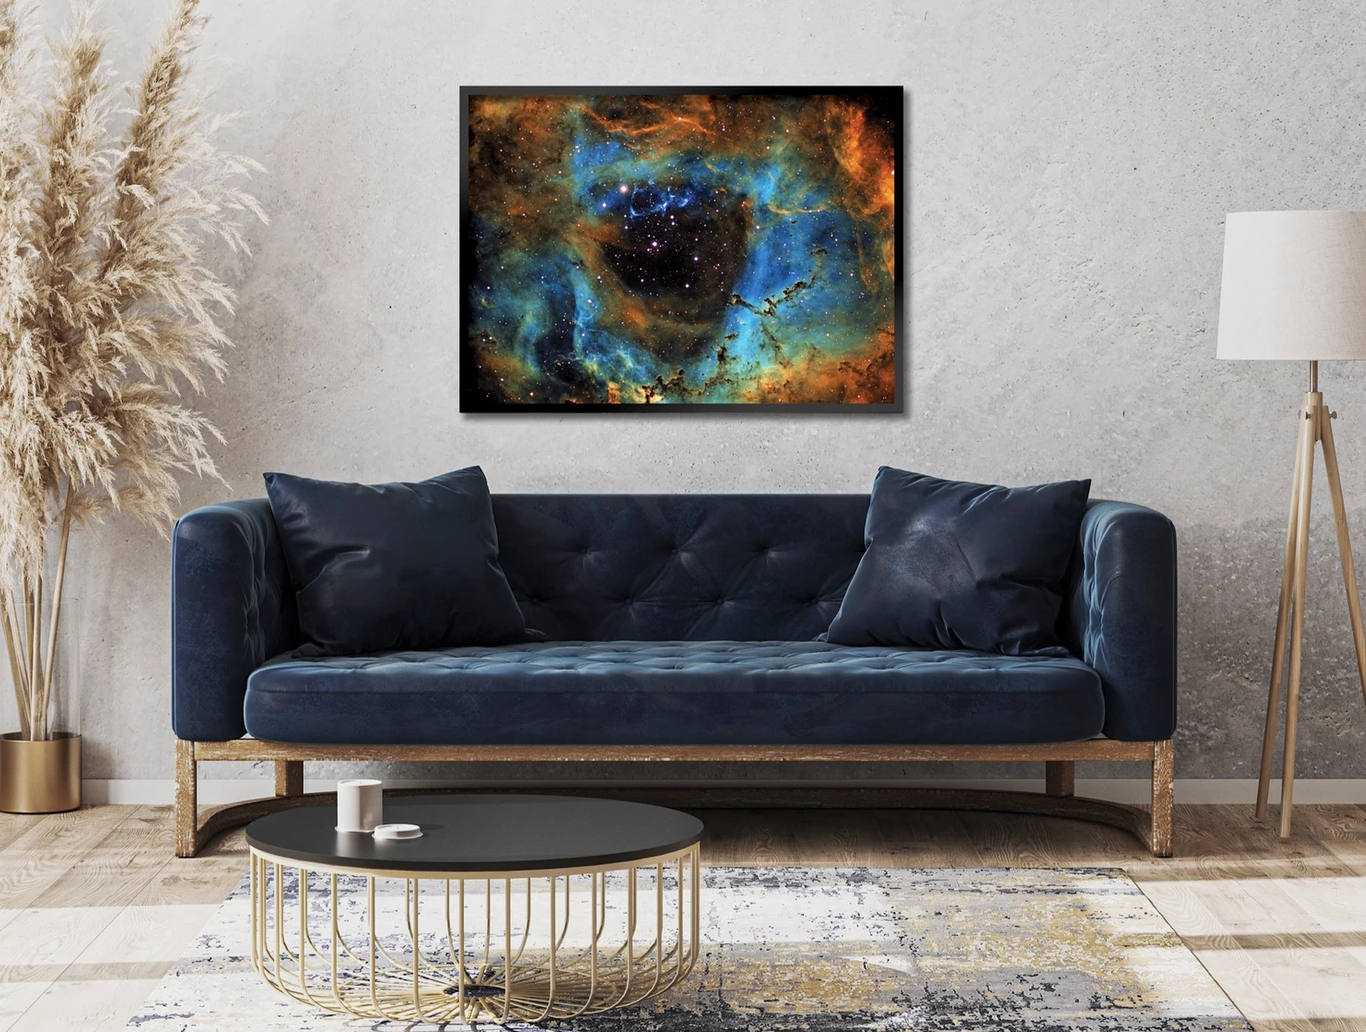 Astronomy artworks